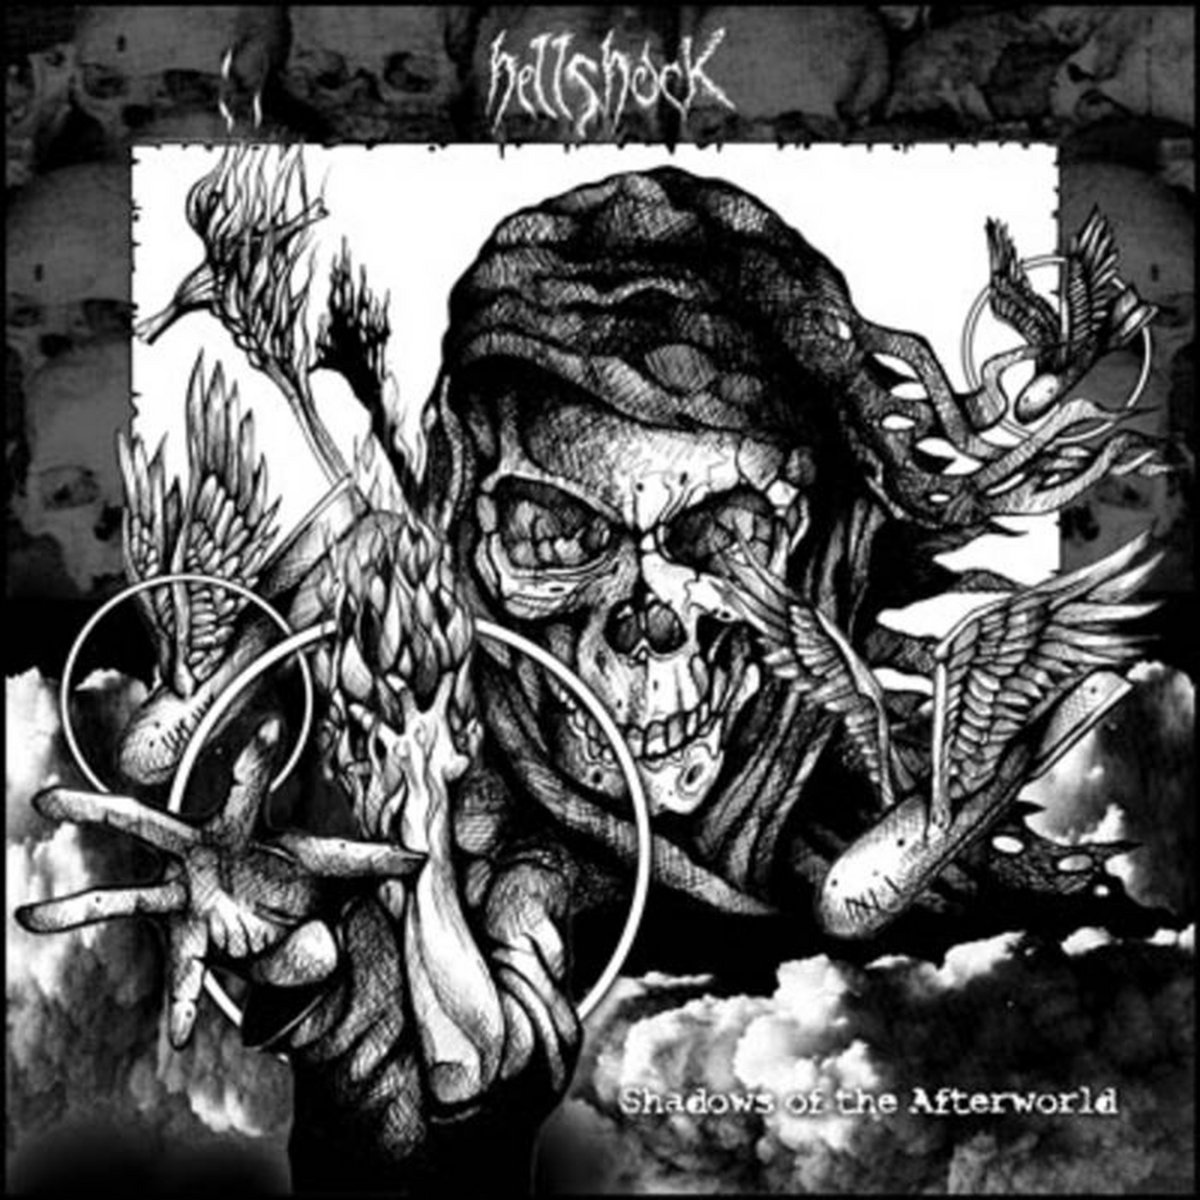 Hellshock PDX 
#deathmetal #thrashmetal #crustpunk 🇺🇲
Album: Shadows of the Afterworld (2005)
hellshock1.bandcamp.com/album/shadows-…